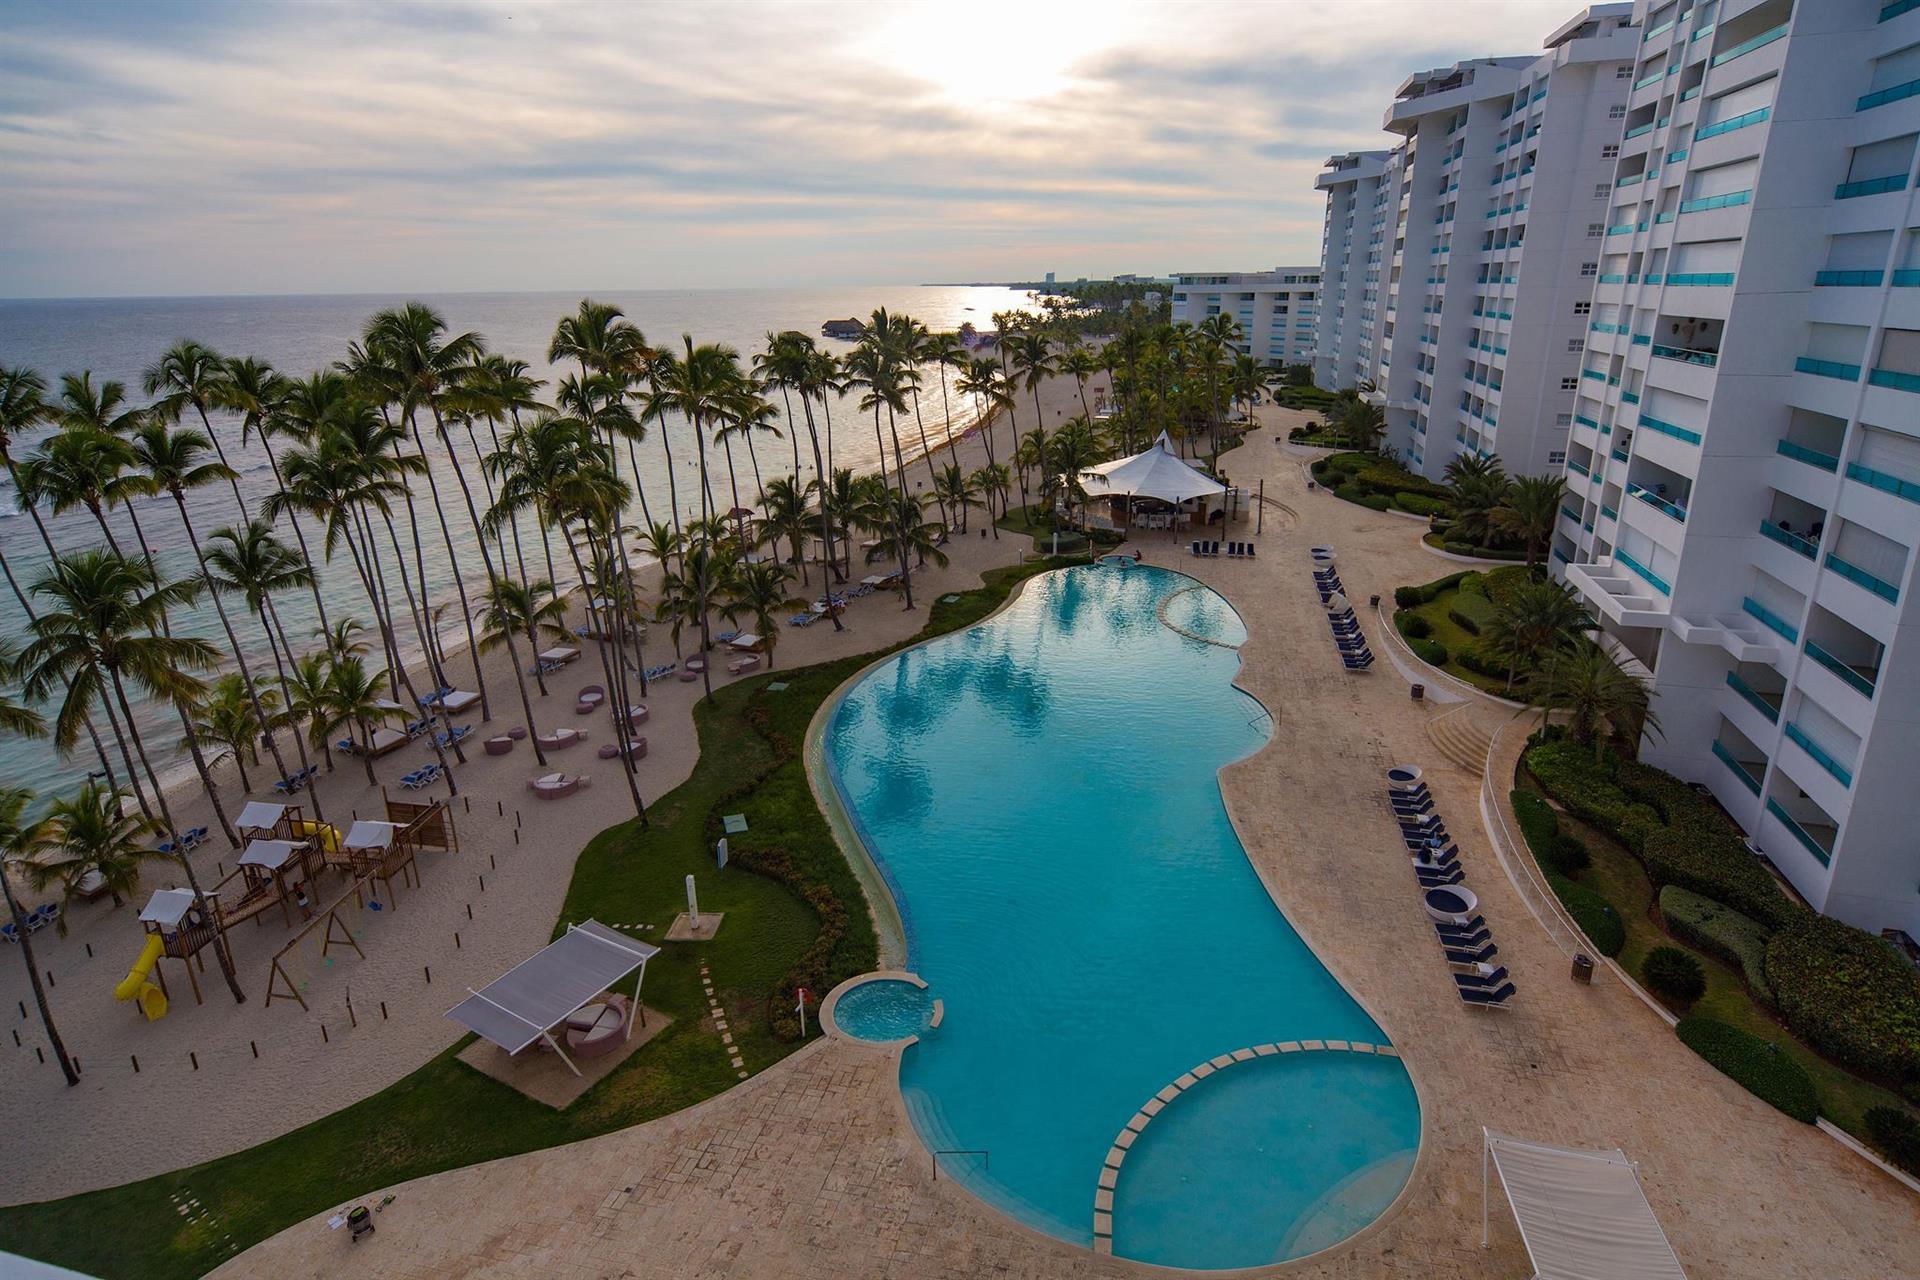 Costa caribe beach hotel 3. Gran Caribe Neptuno & Triton 3*. Costa Caribe Beach Hotel Resort 4 Венесуэла. Costa Caribe Beach Hotel Resort 3 Венесуэла.